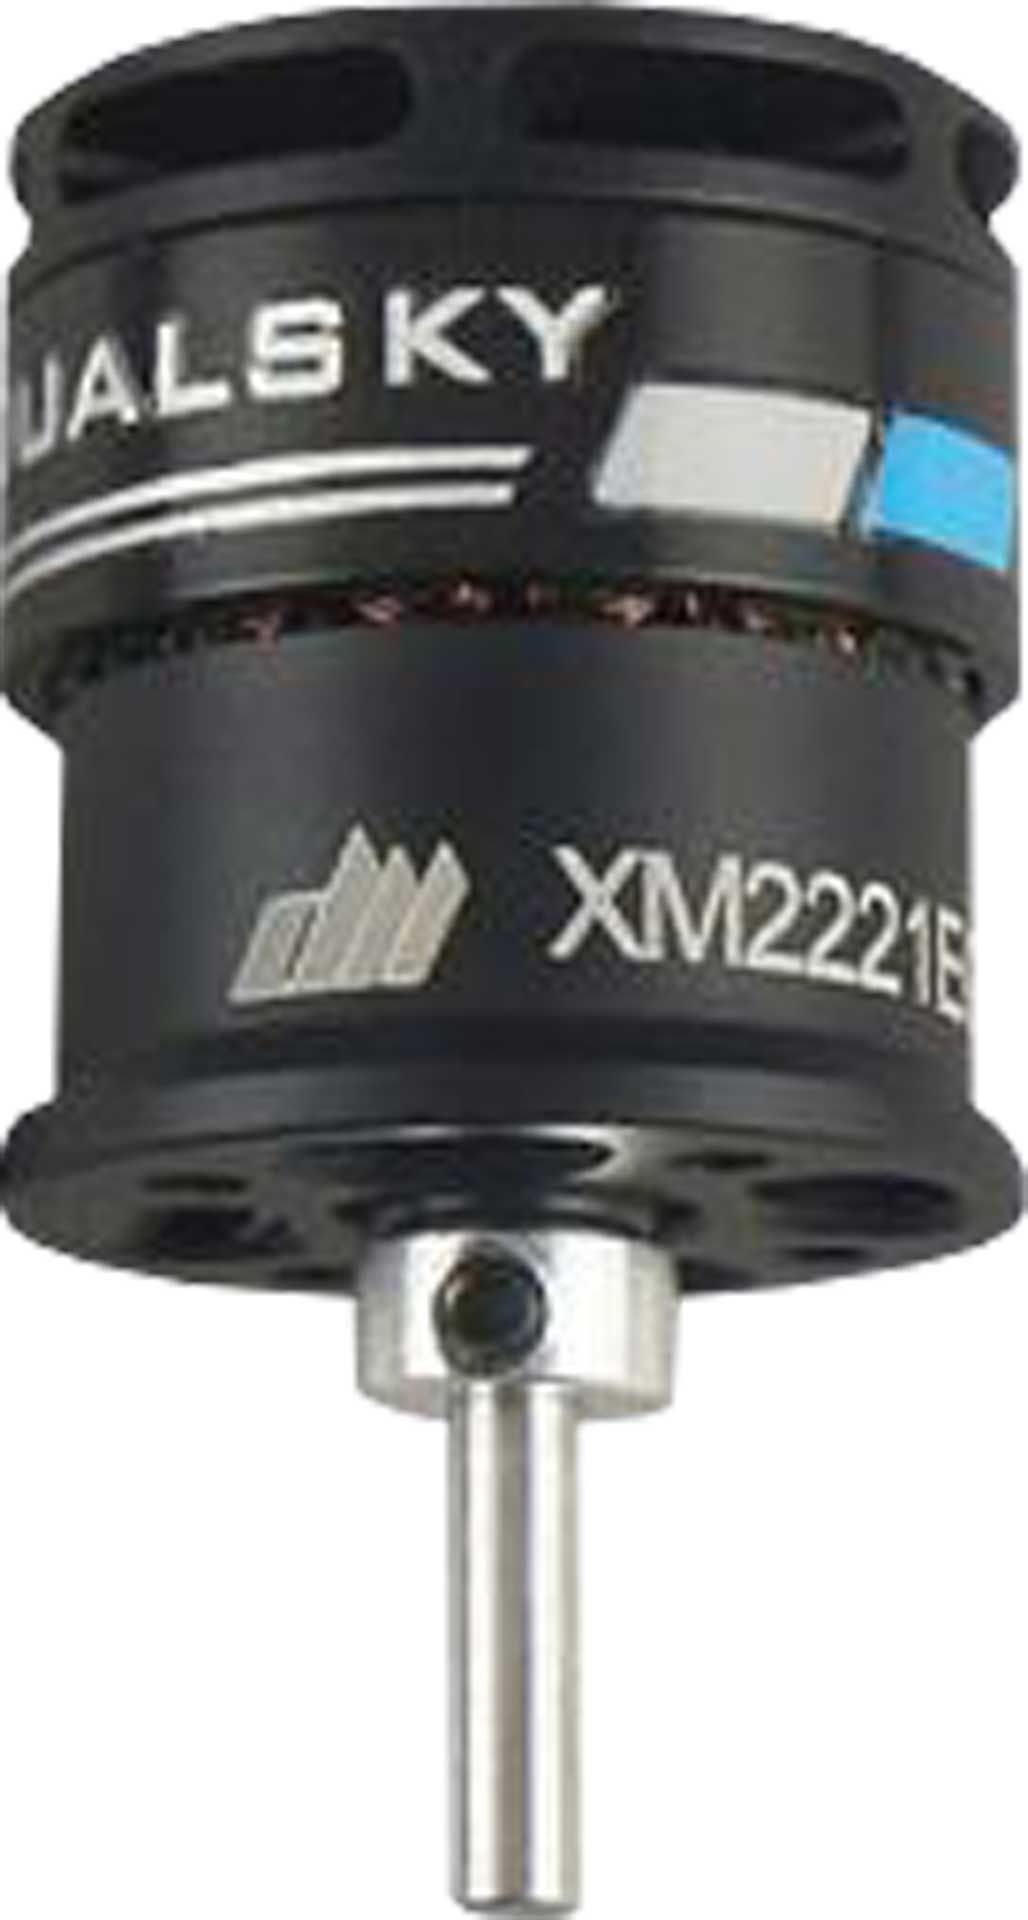 DUALSKY XMotor XM2221EG-22 K/V 2900 125,8W für Micro Speed Modelle o.ä. Brushless Motor